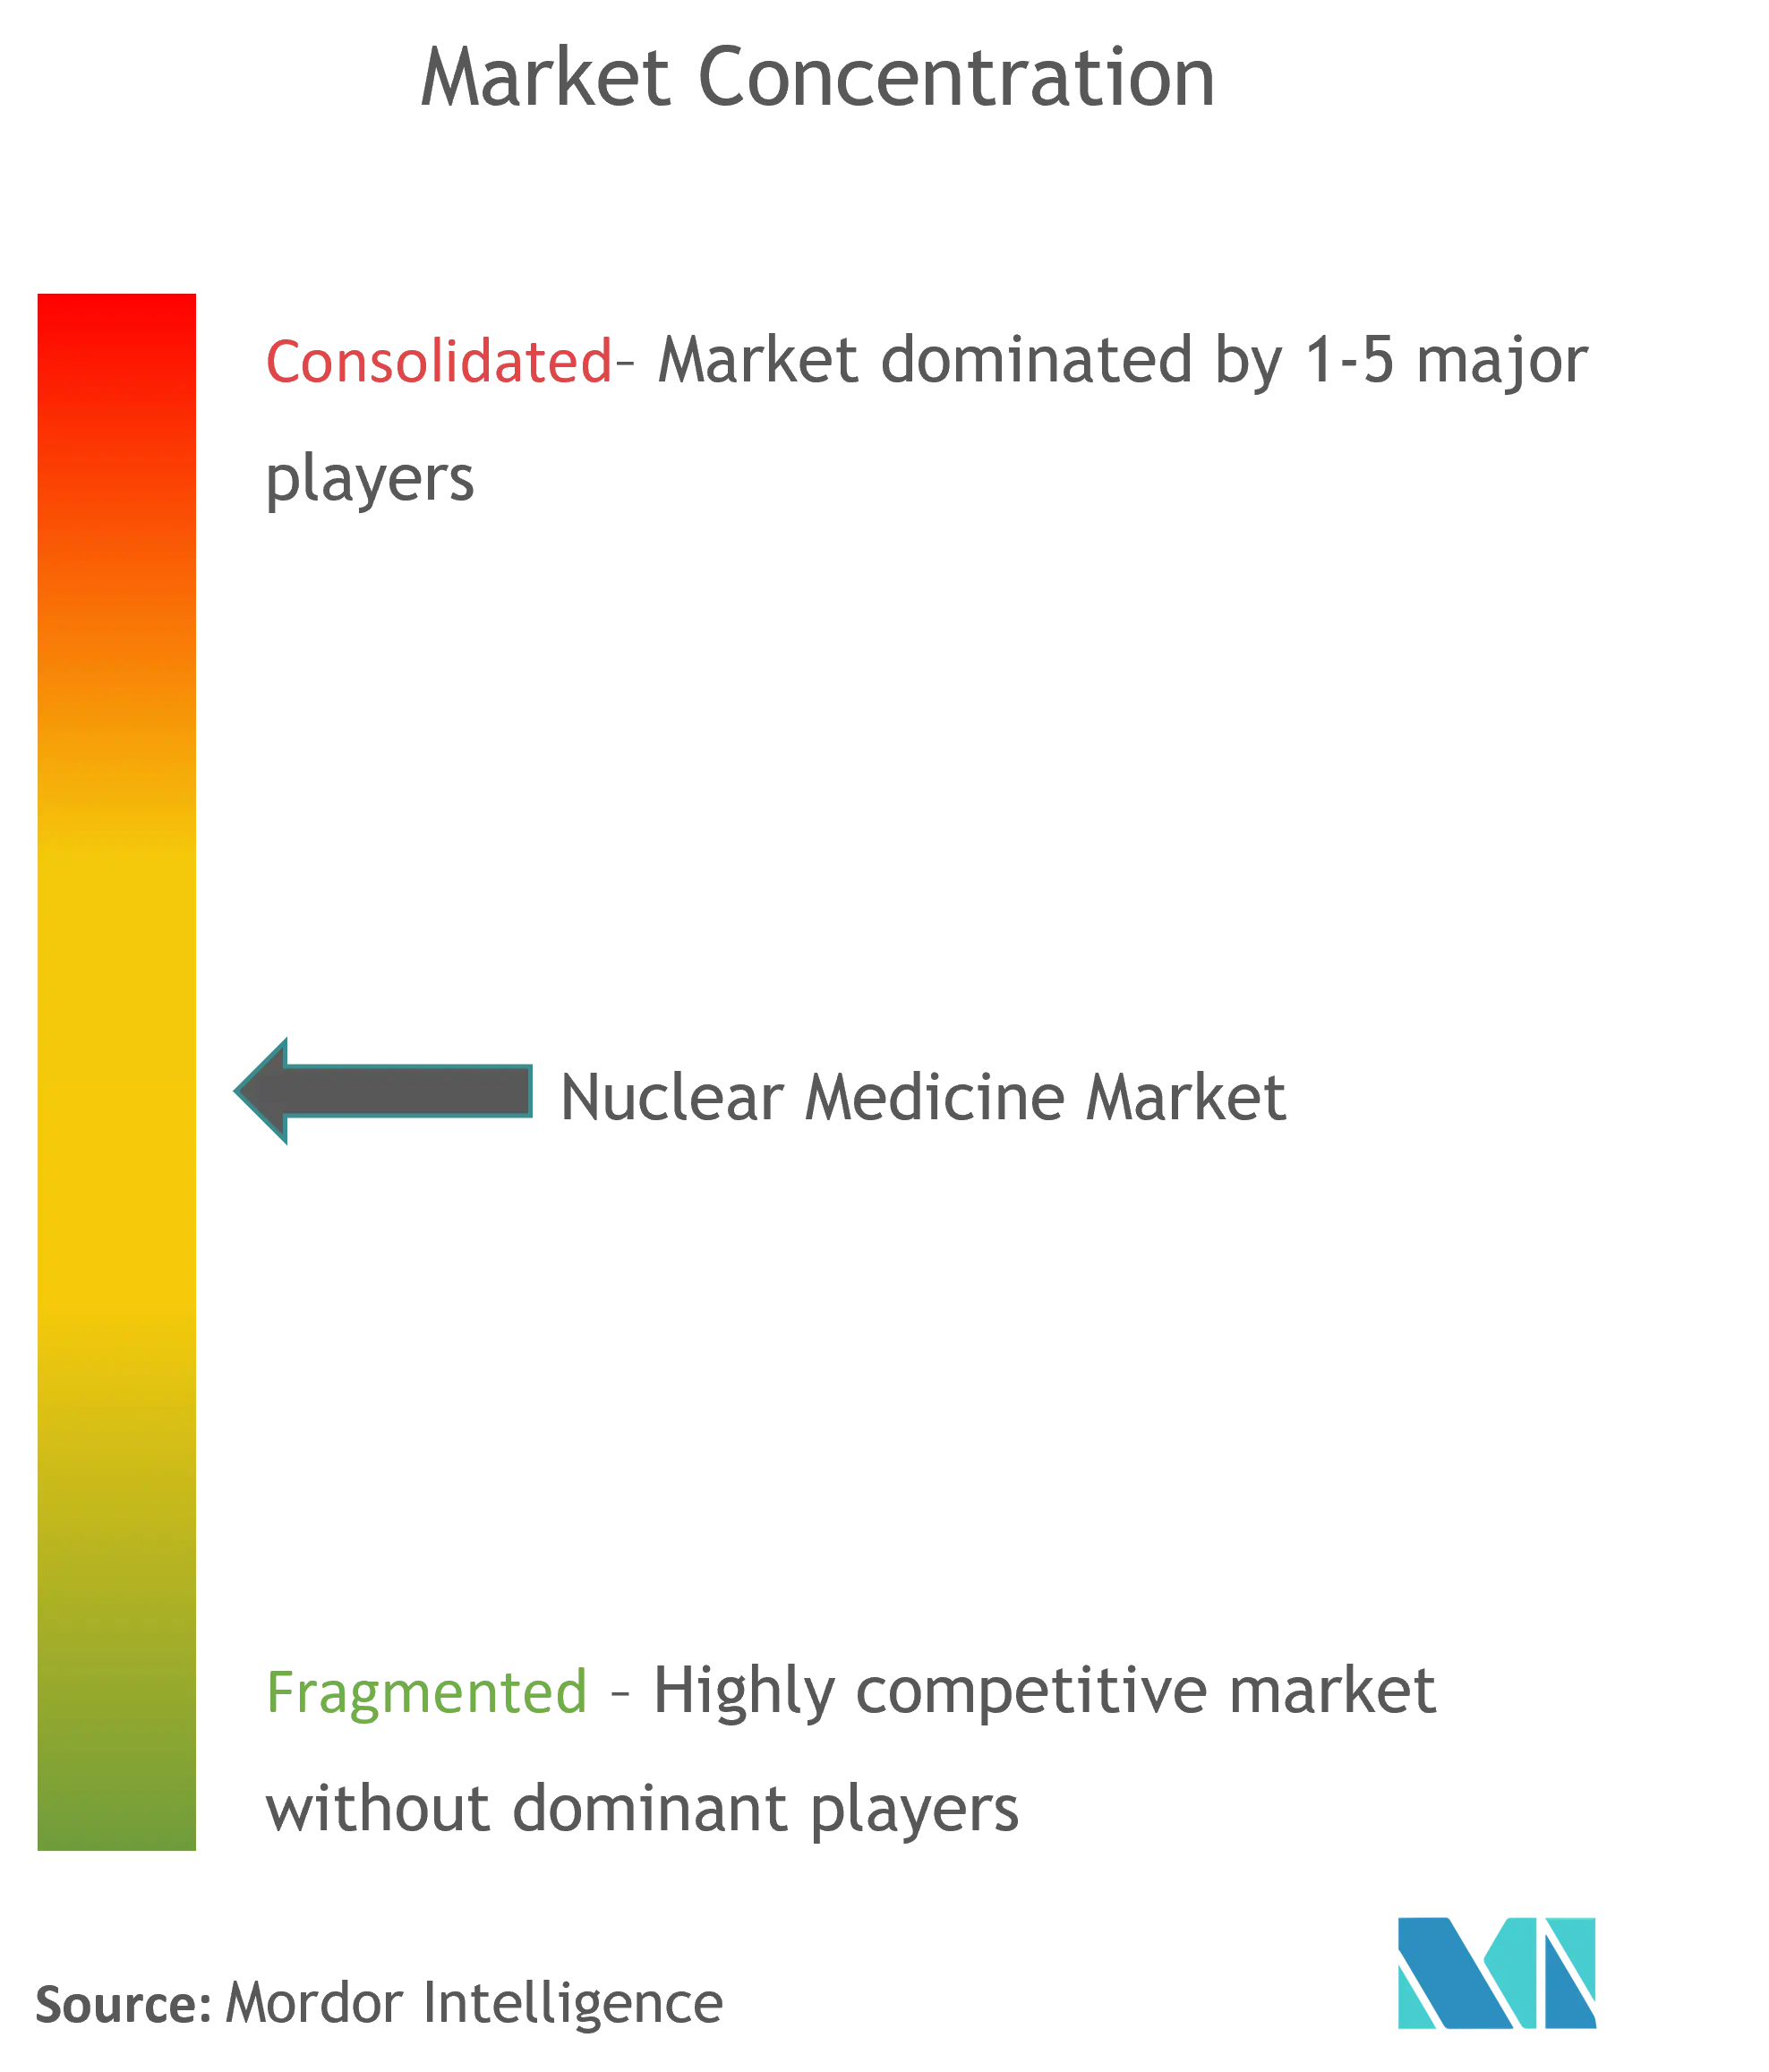 Nuclear Medicine Market Concentration